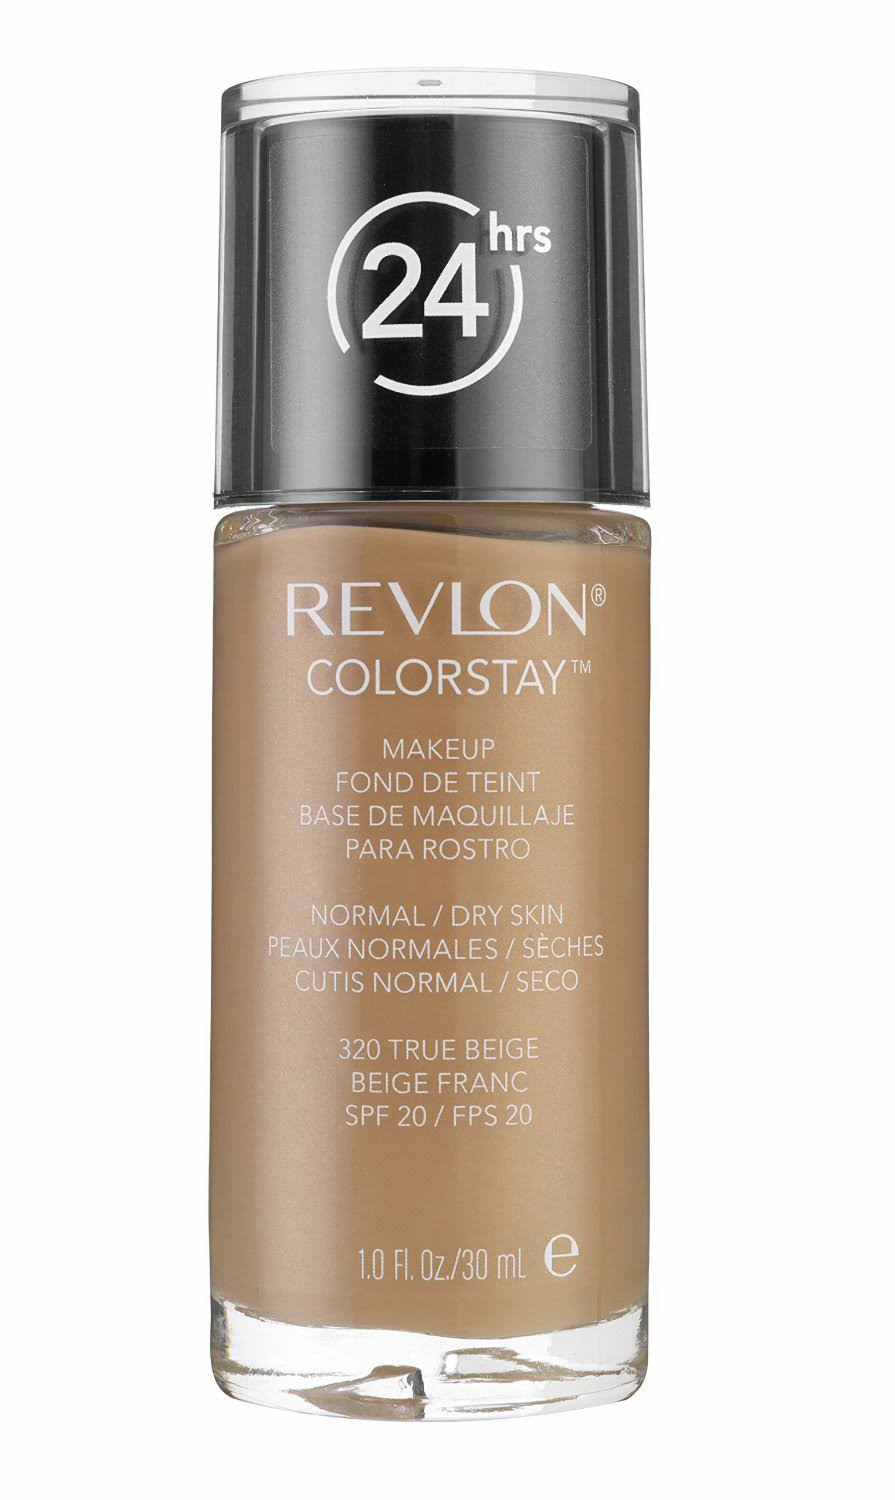 Revlon Colorstay Makeup for Normal/Dry Skin - Natural Tan